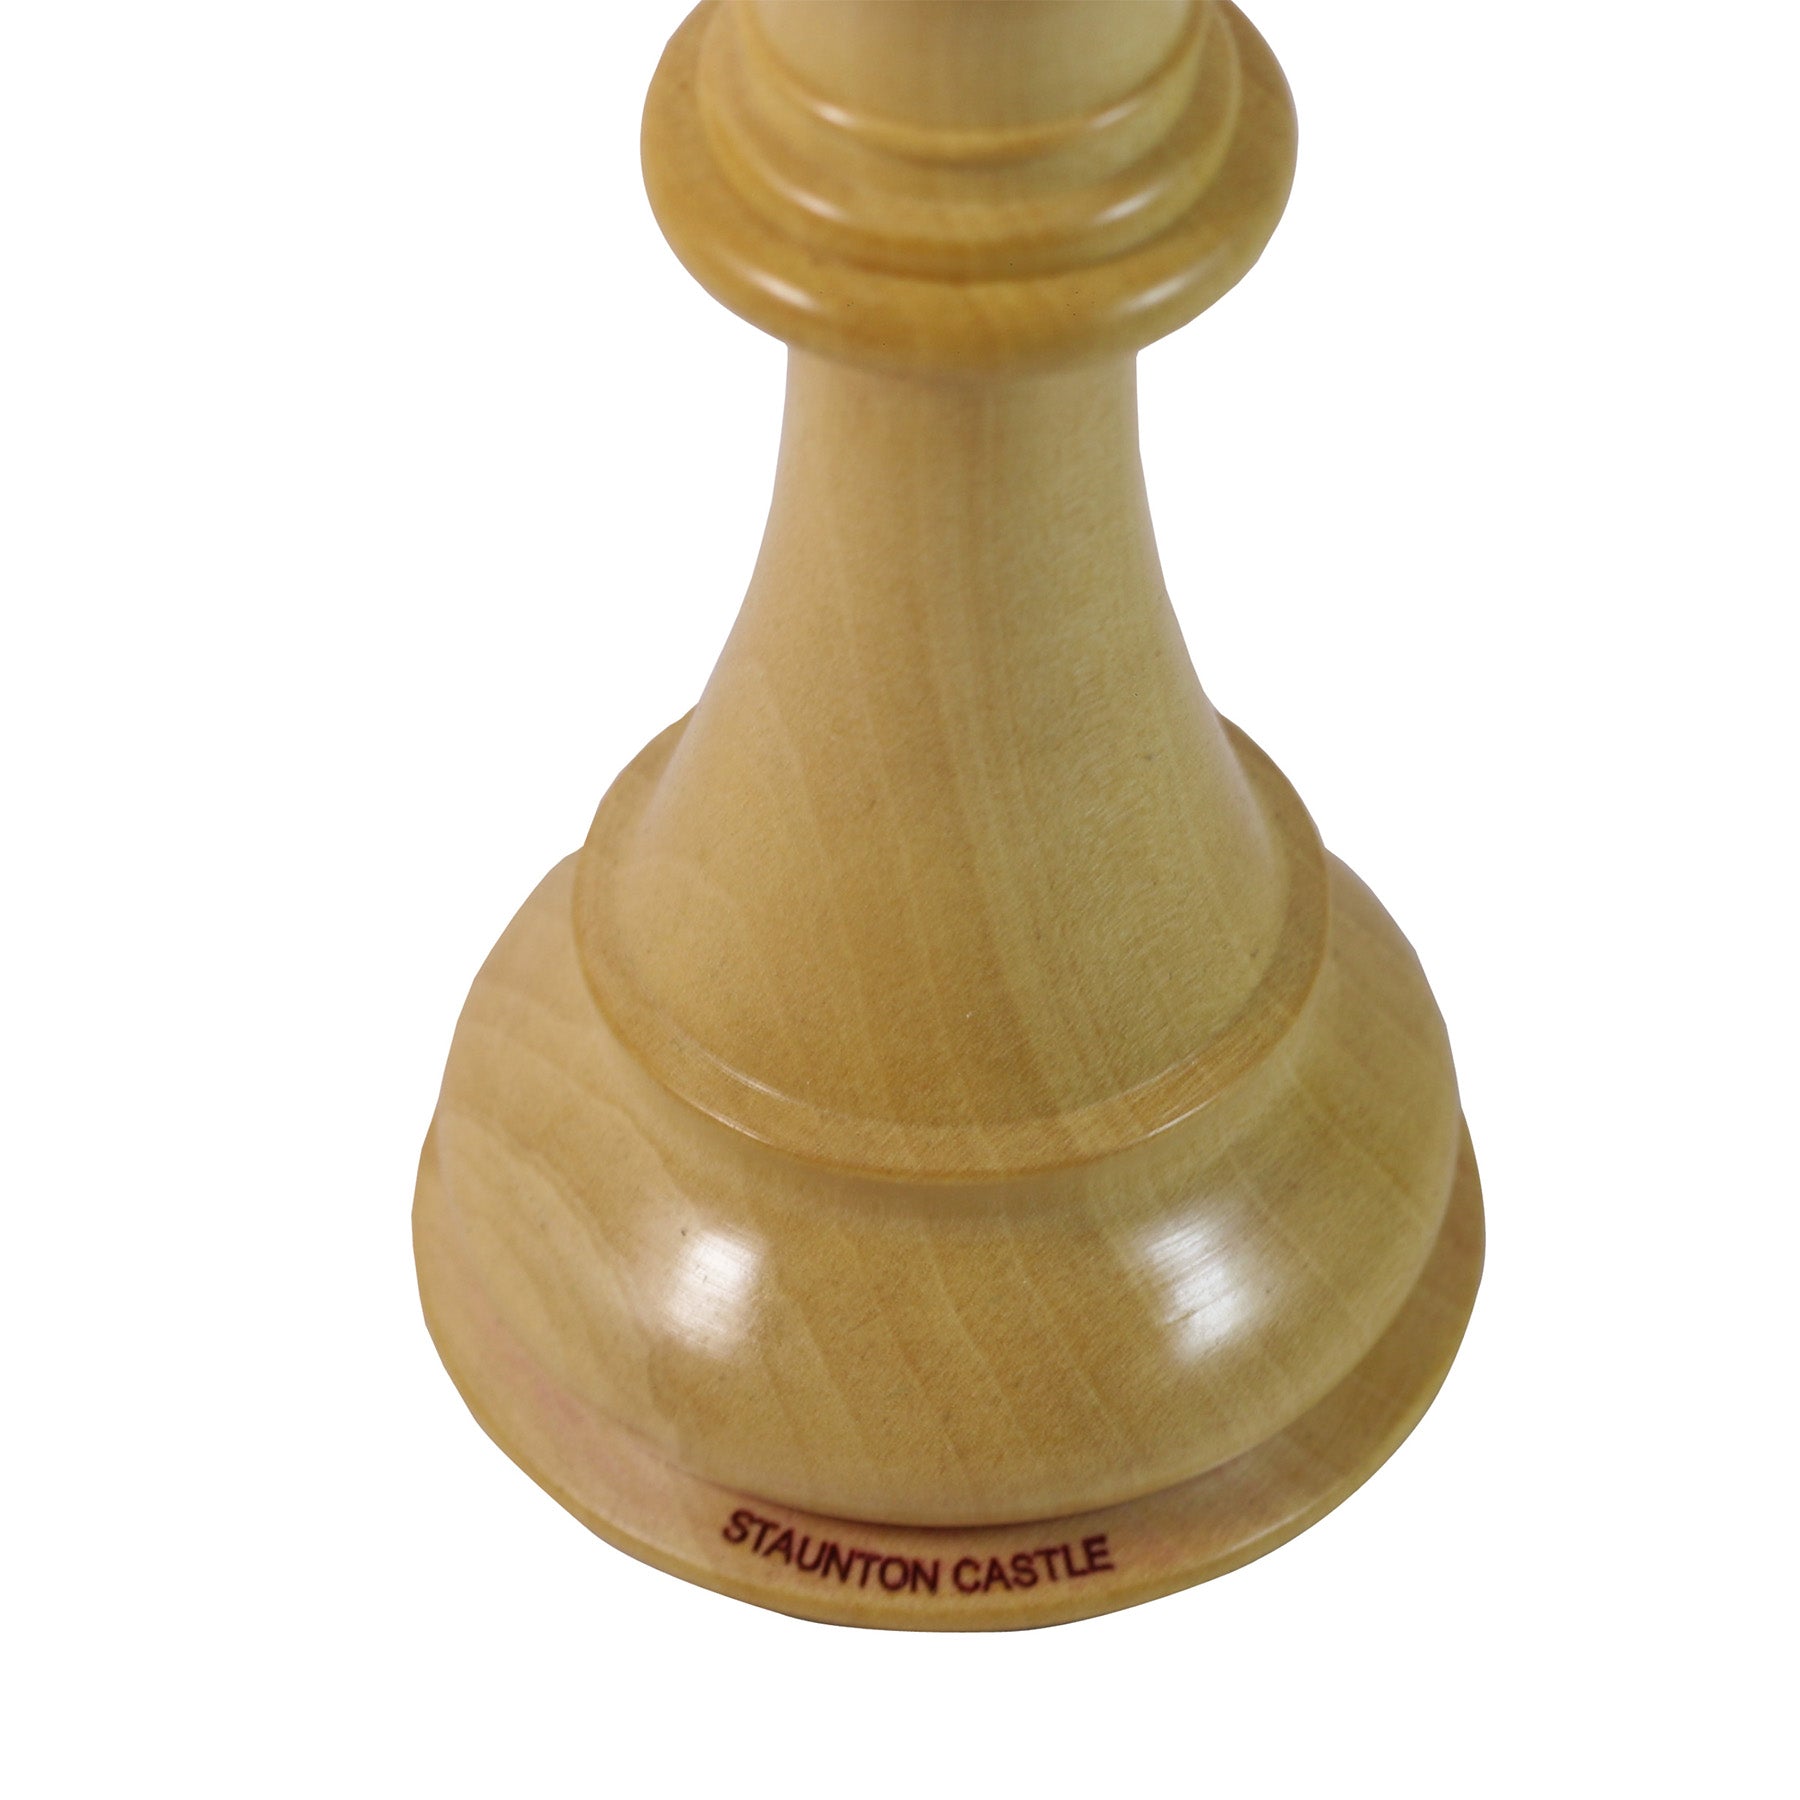 Bridle Series 4.5" Premium Staunton Chess Set in African Padouk and Box Wood